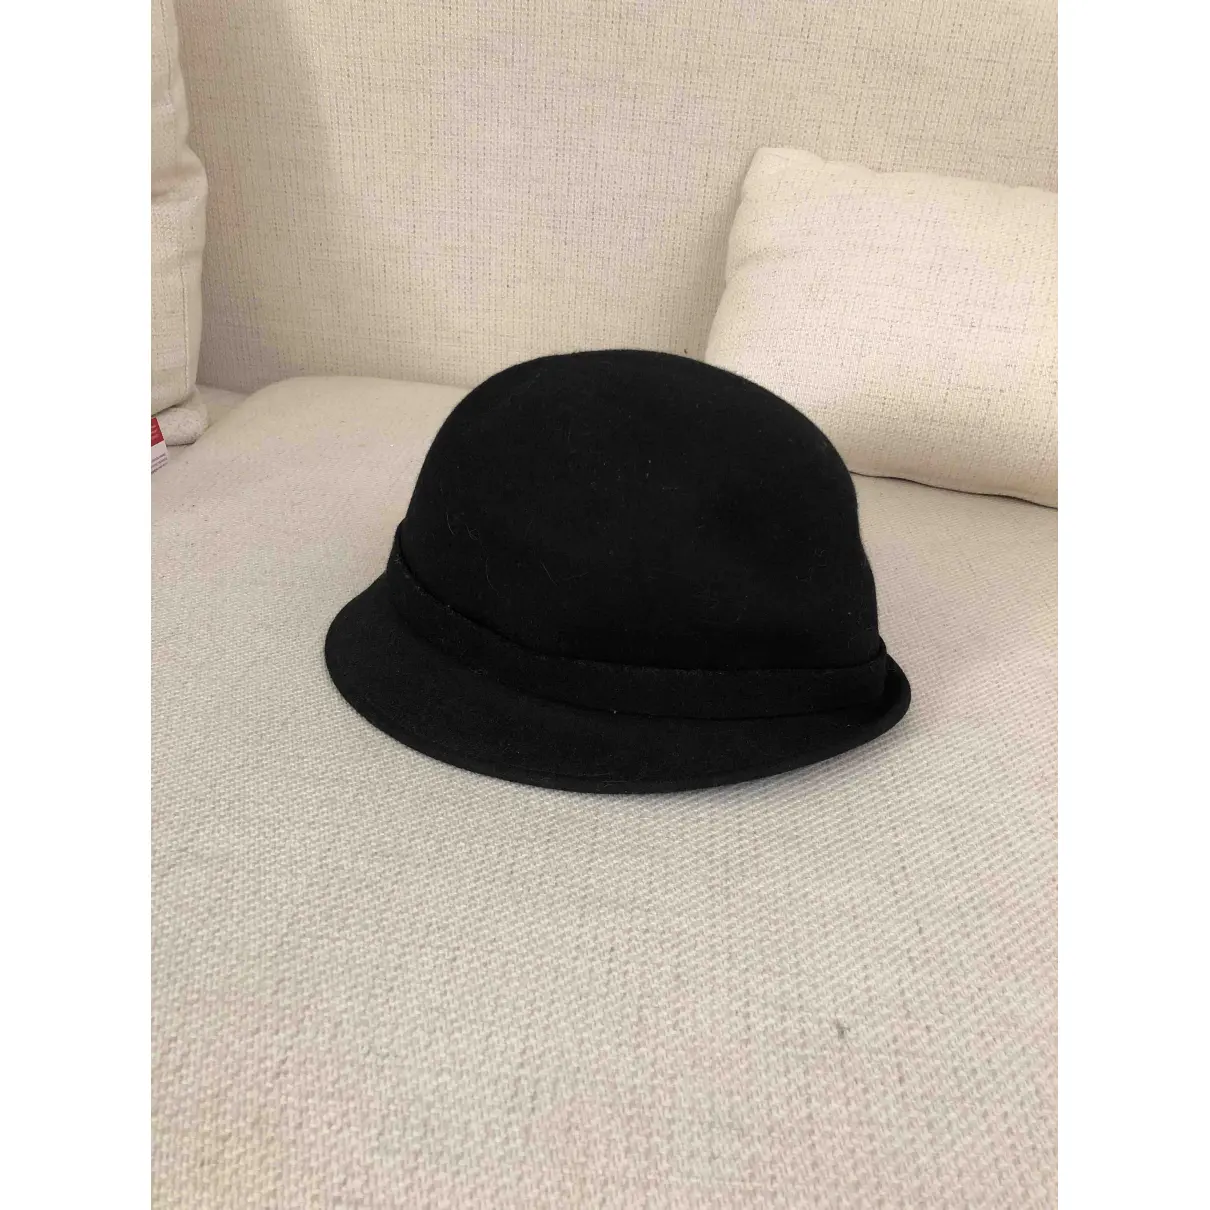 Buy Marella Wool hat online